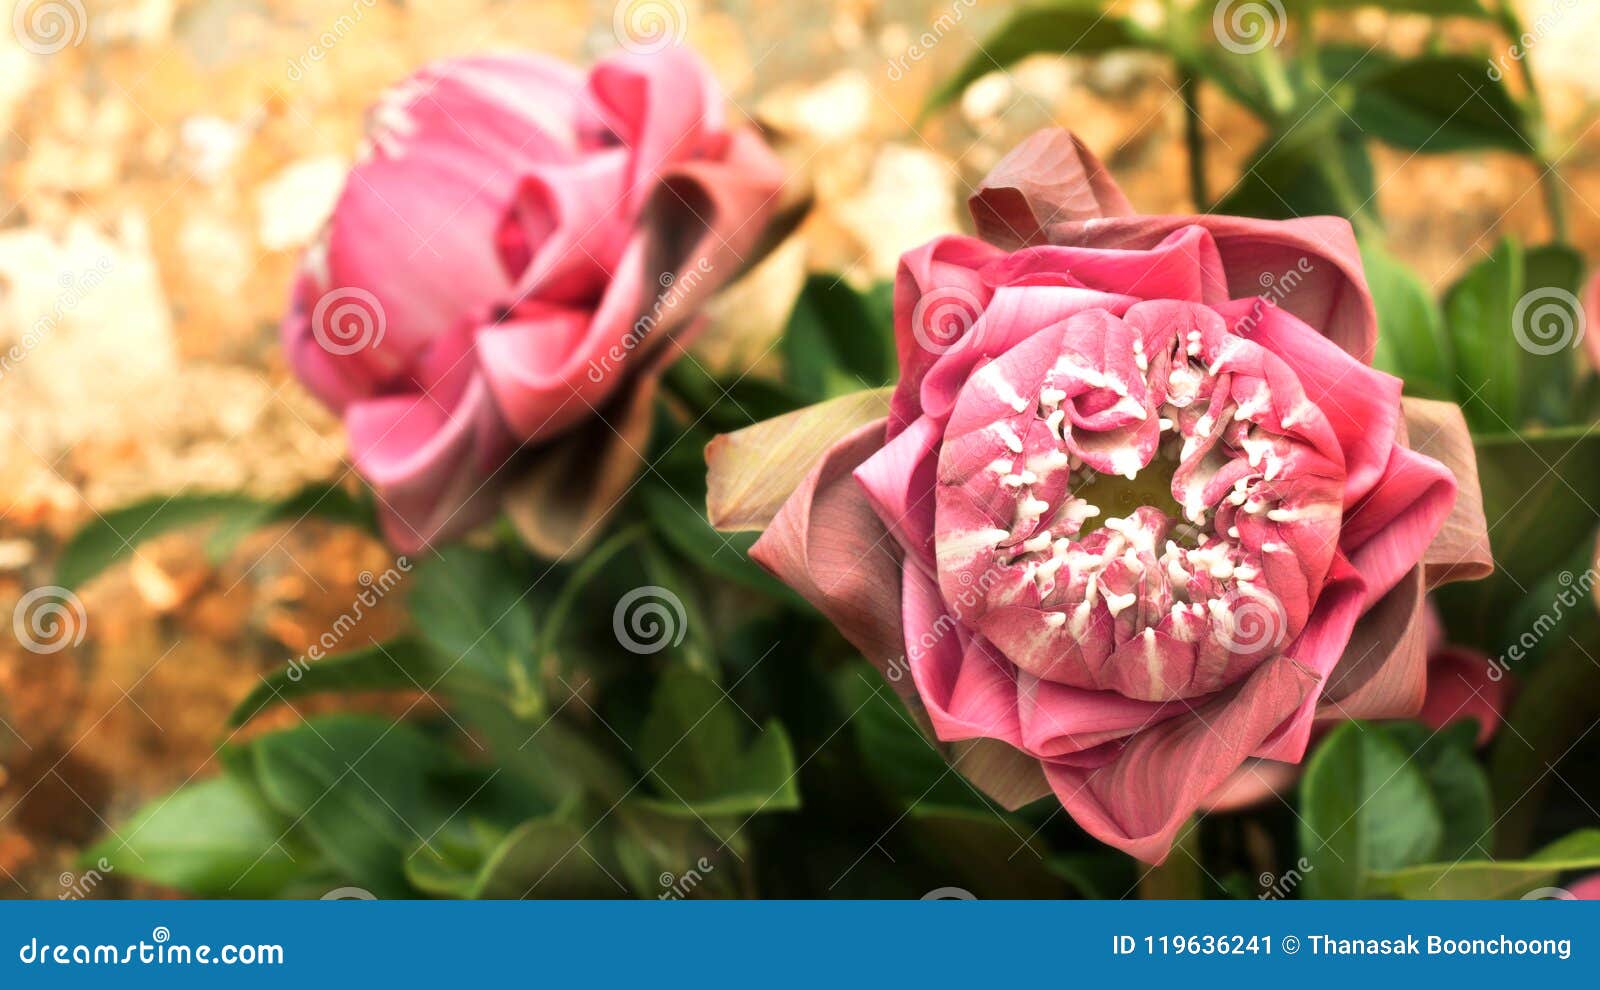 pink lotus flower dedicated to the buddha image.